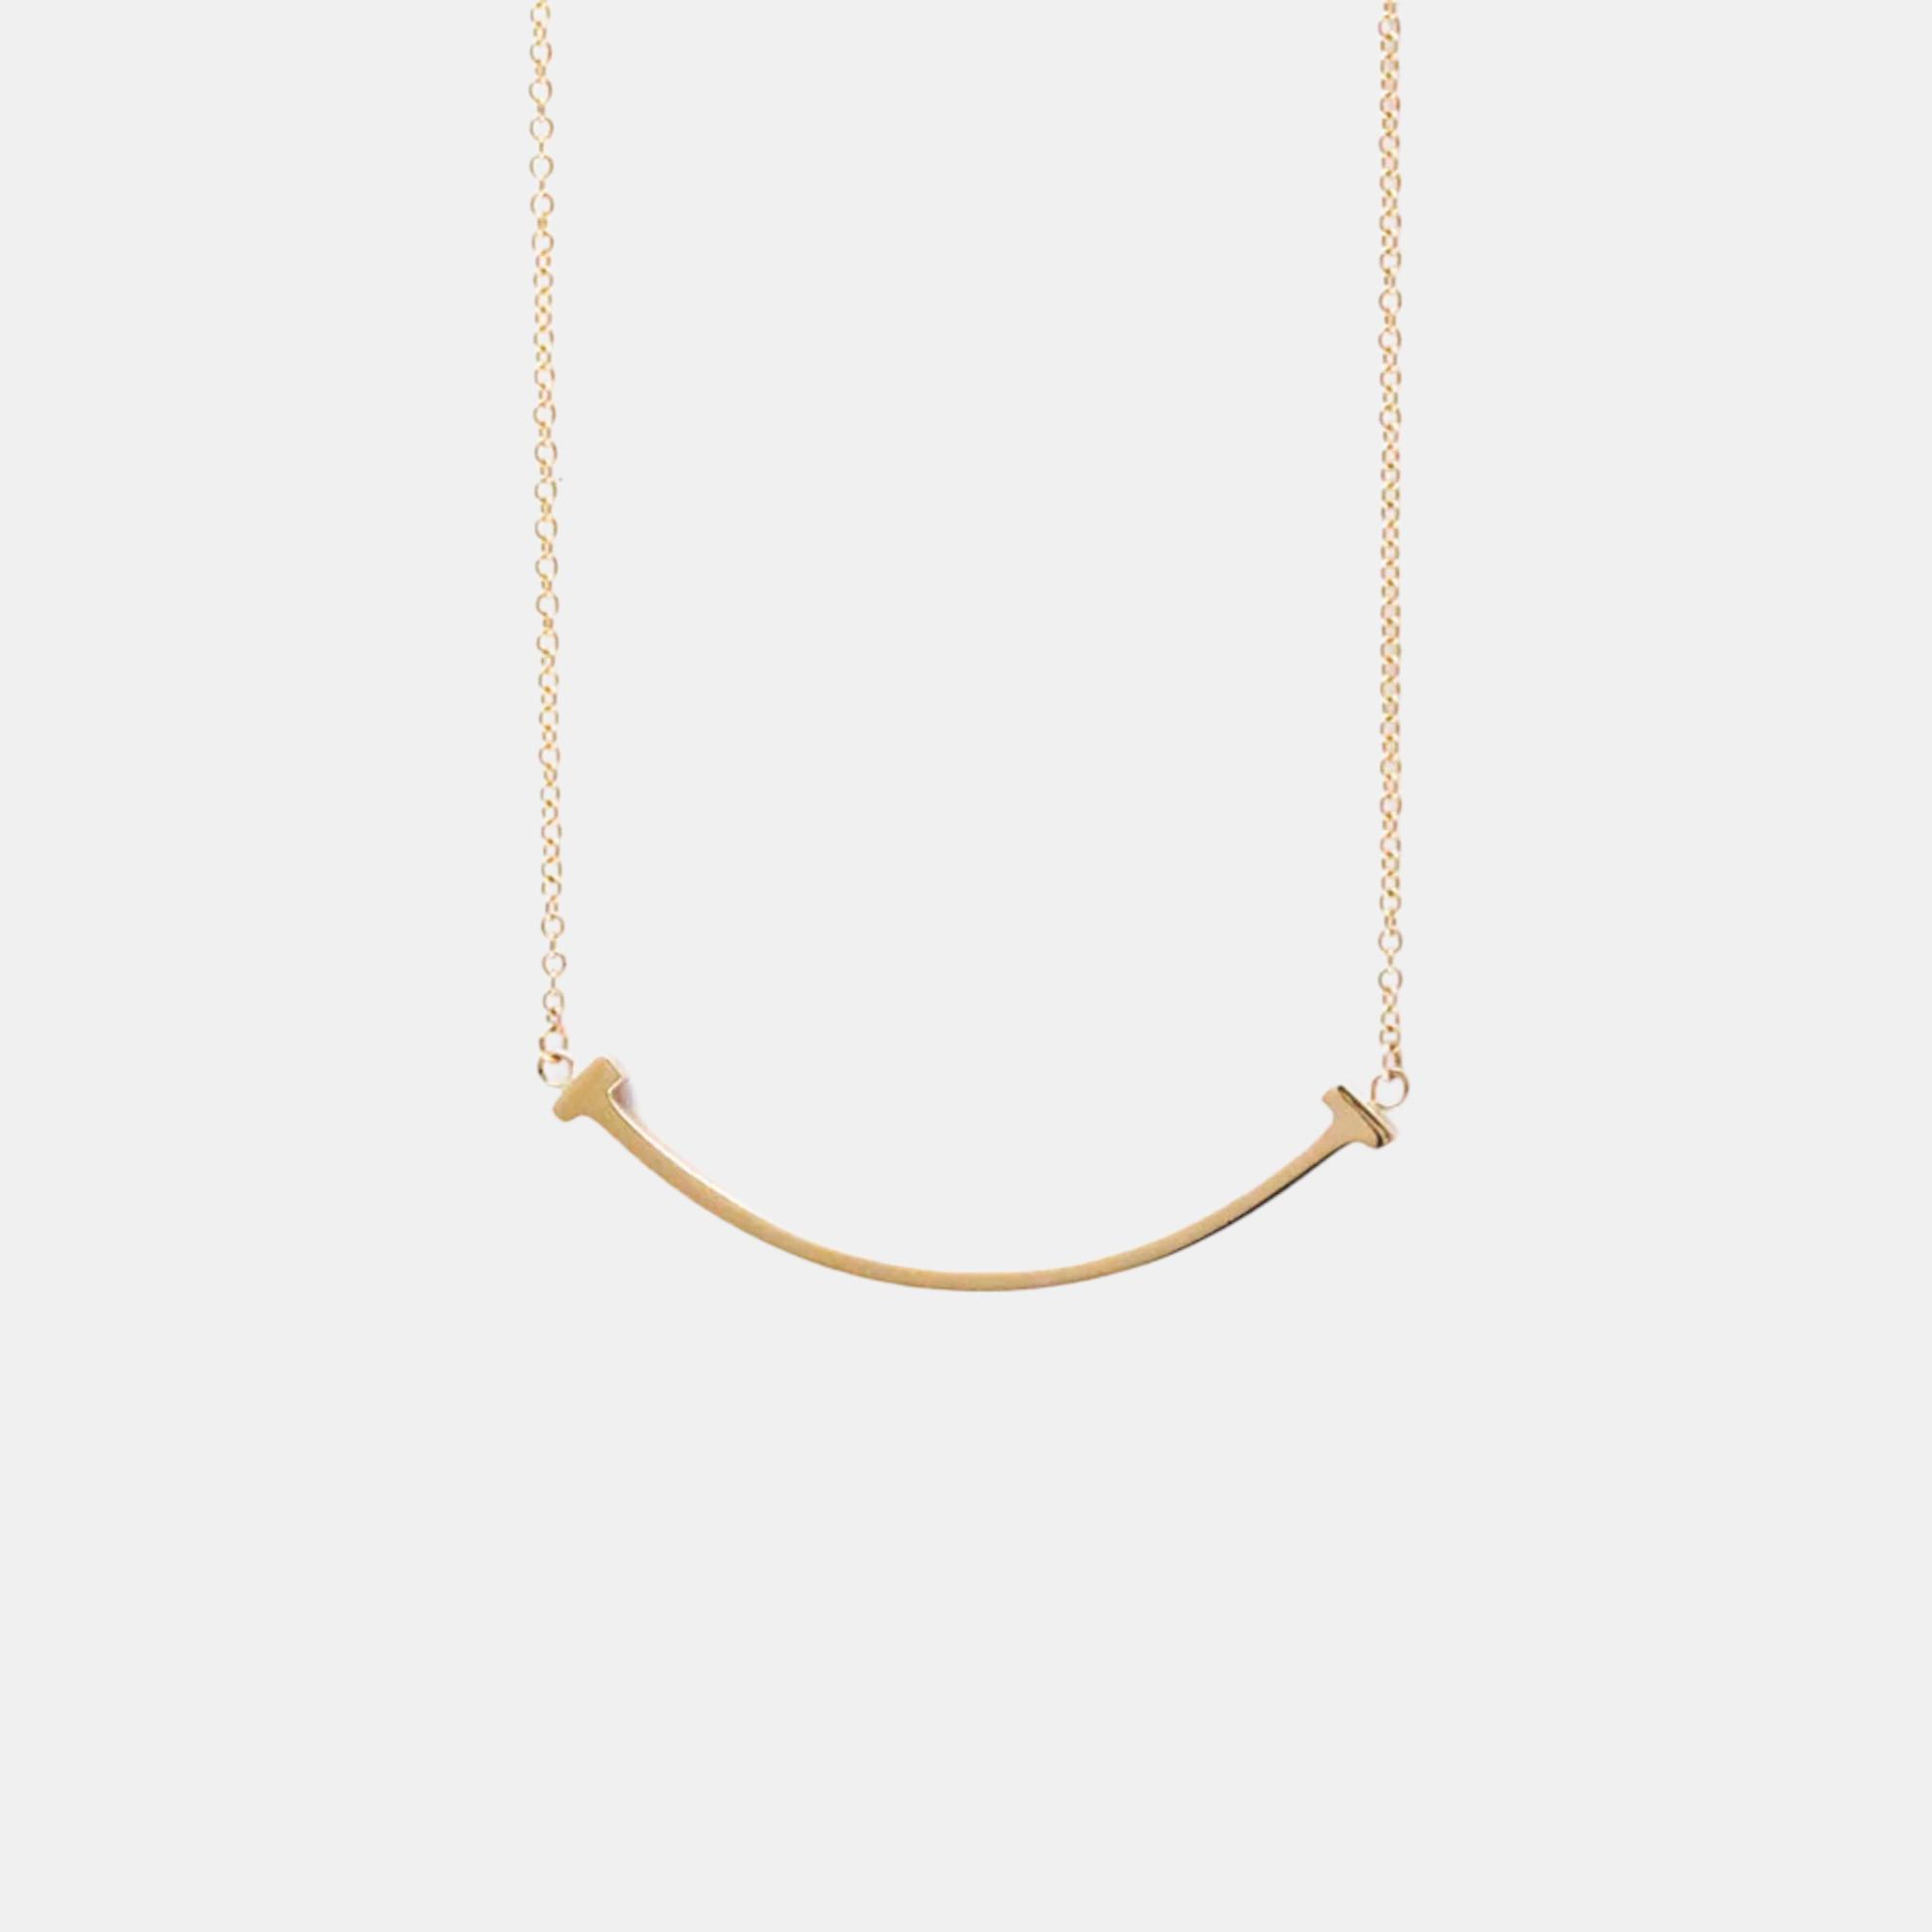 Tiffany & co. 18k rose gold smile pendant necklace